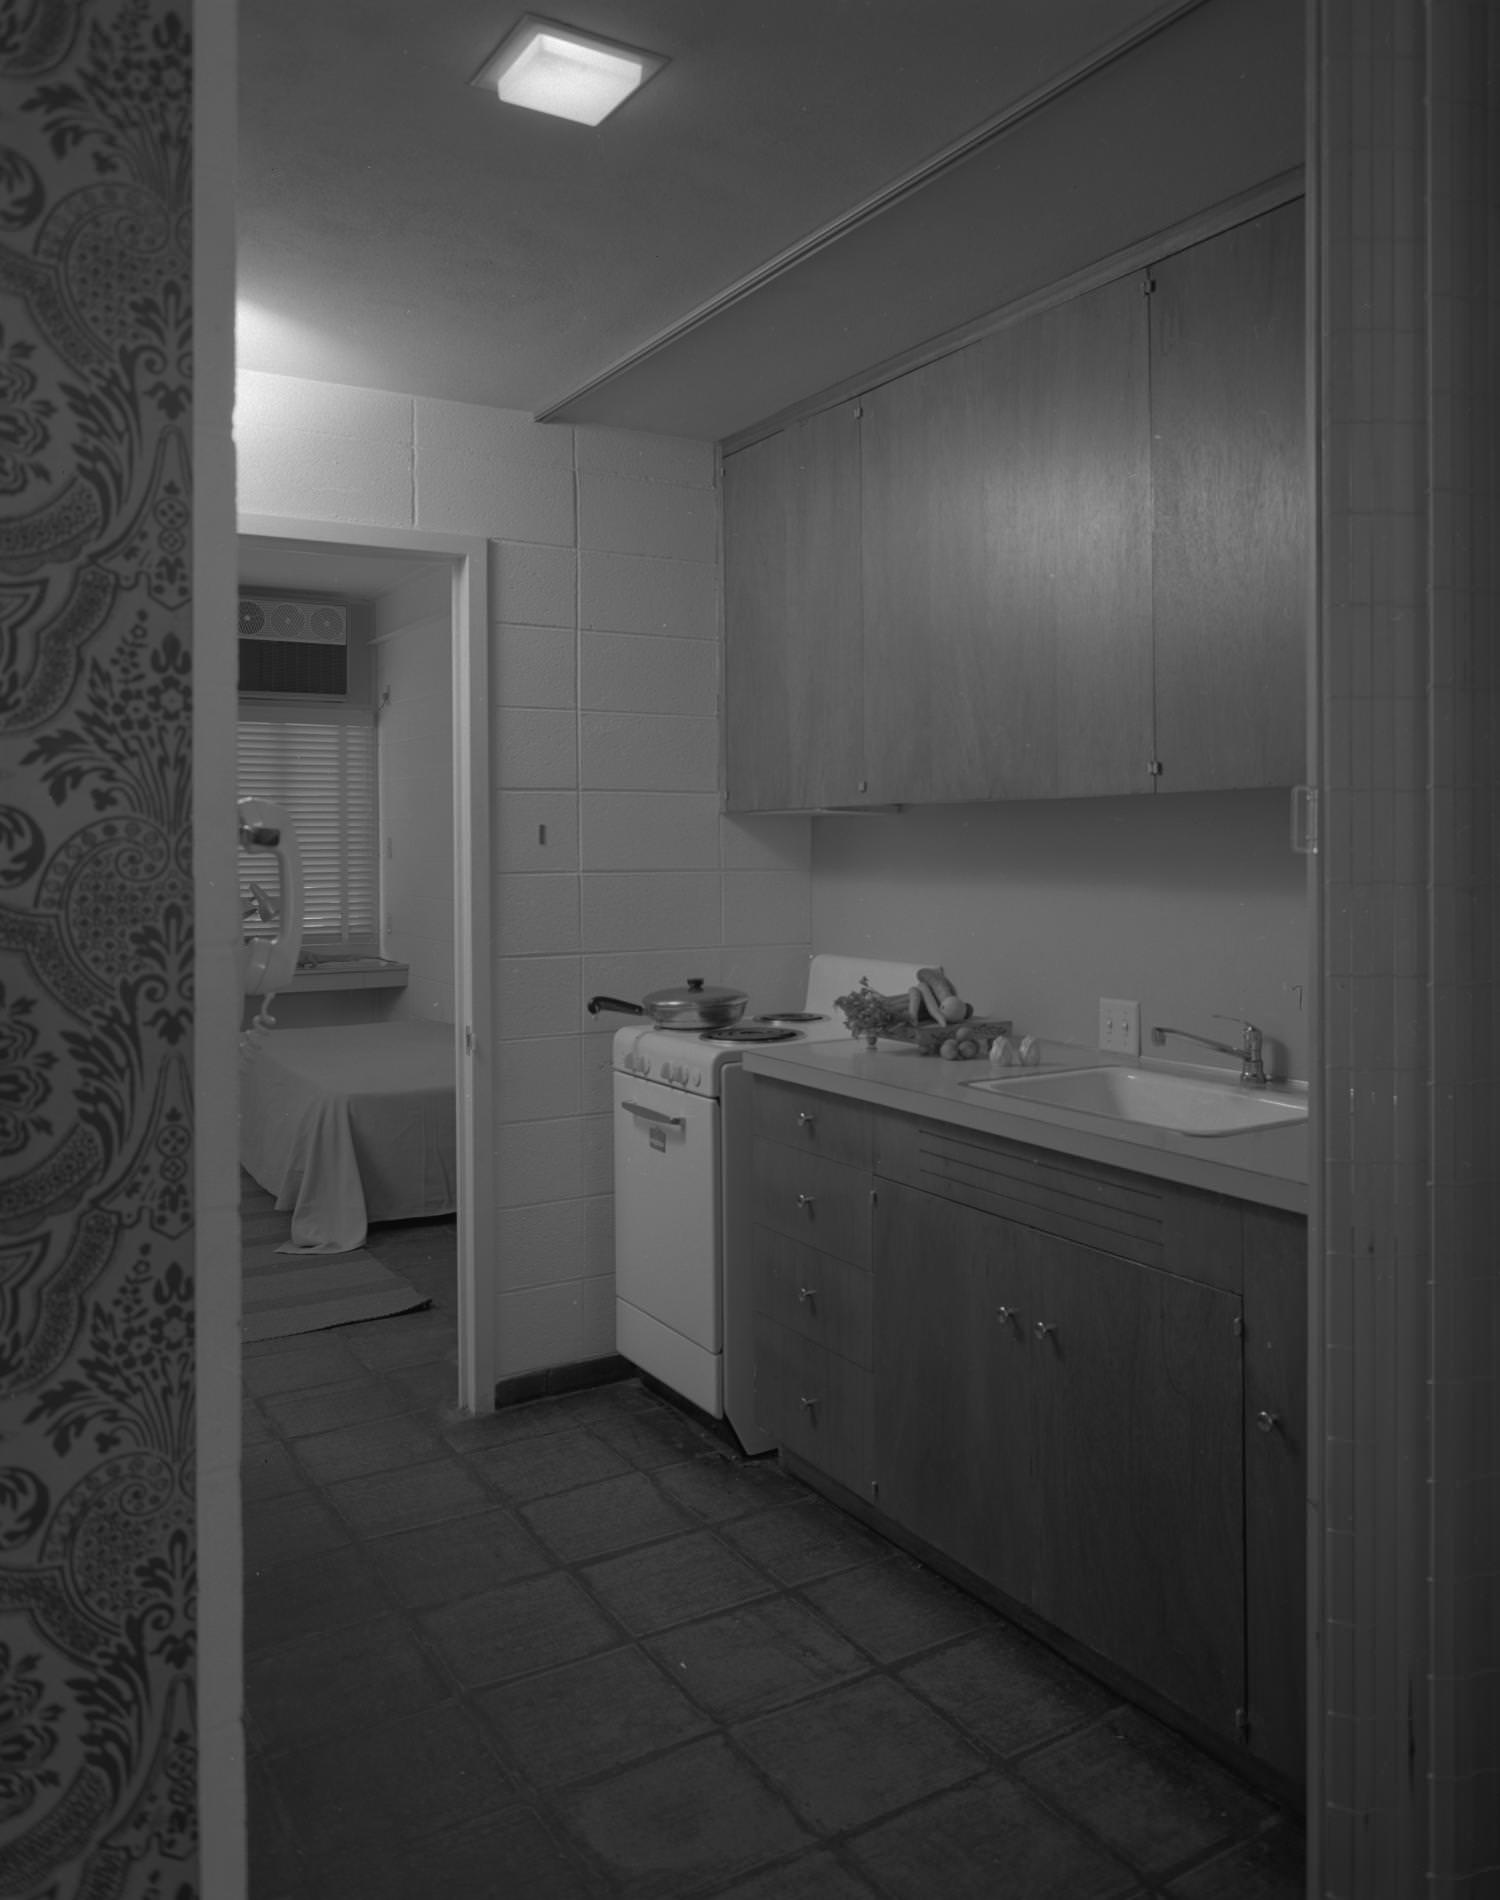 A small apartment kitchen area, 1960